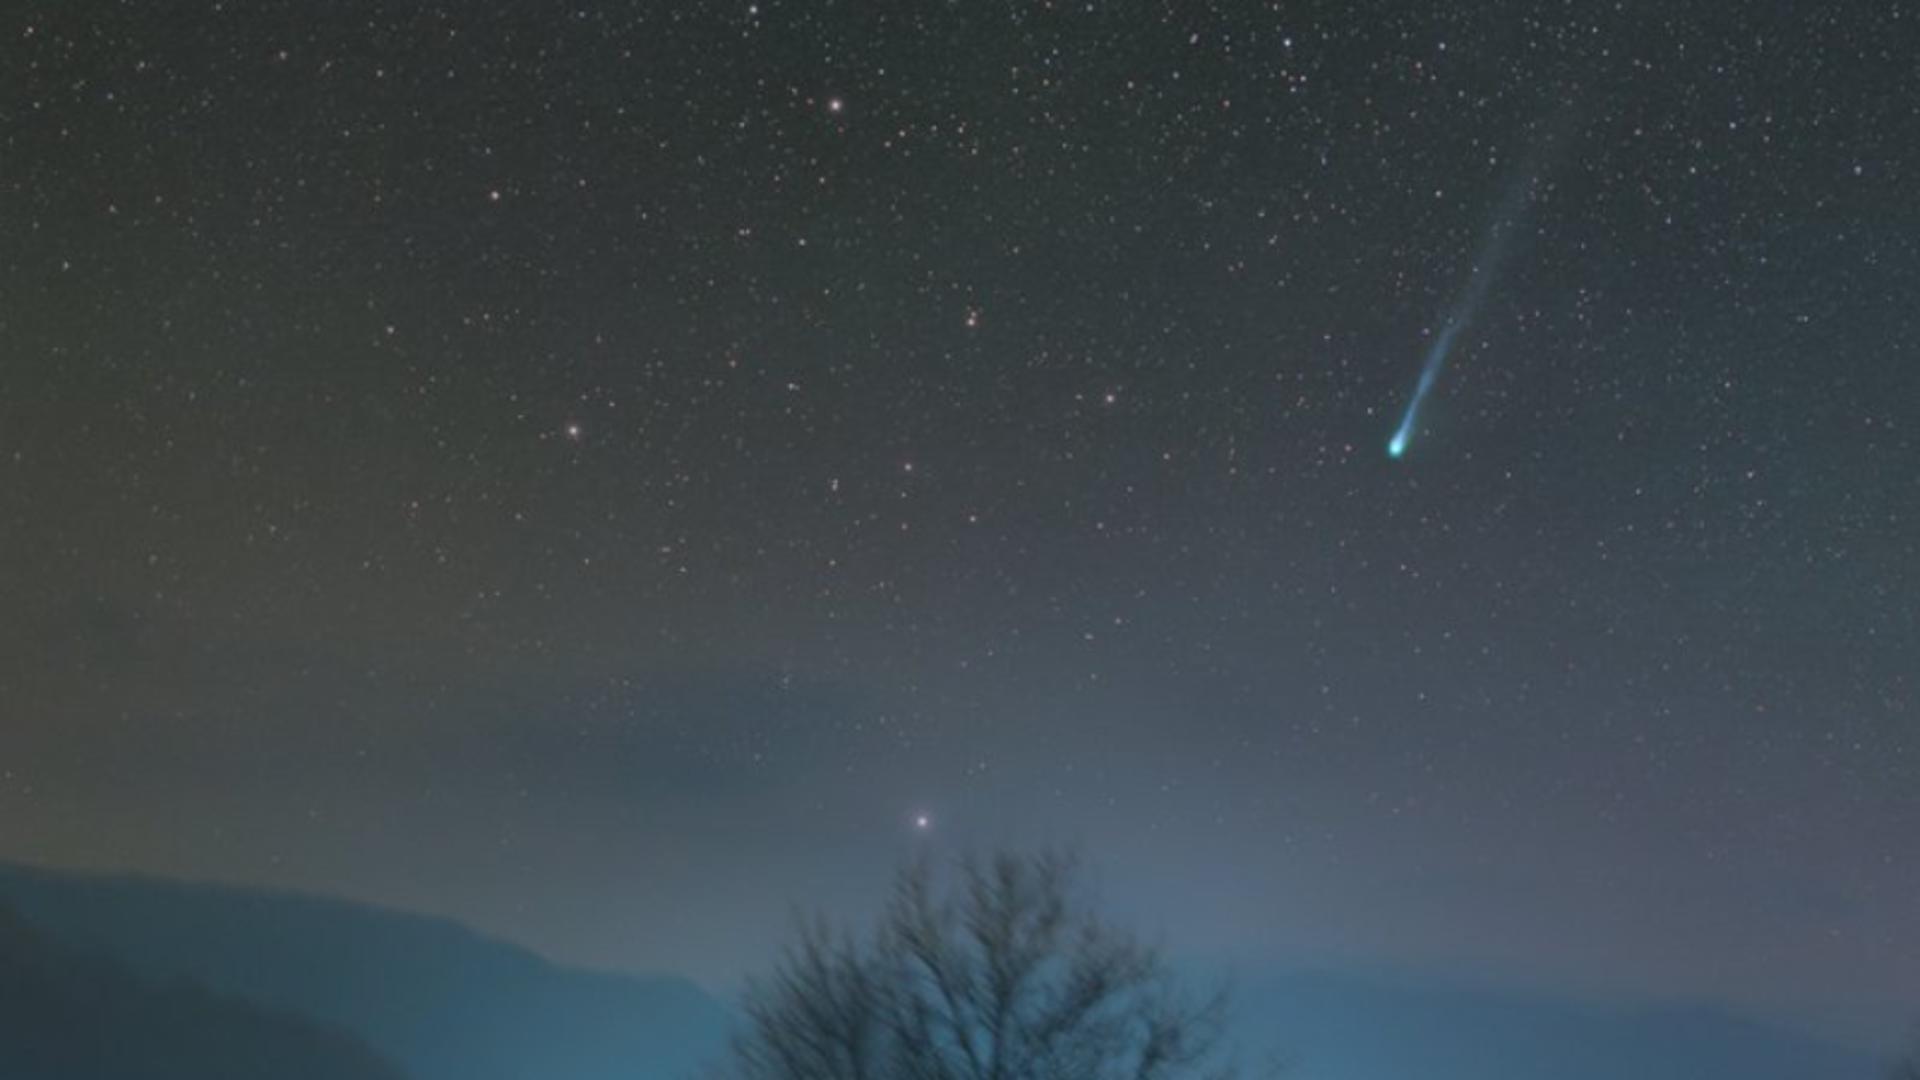 Apariția cometei este un fenomen spectaculos - Foto: Petr Horálek/Institute of Physics in Opava